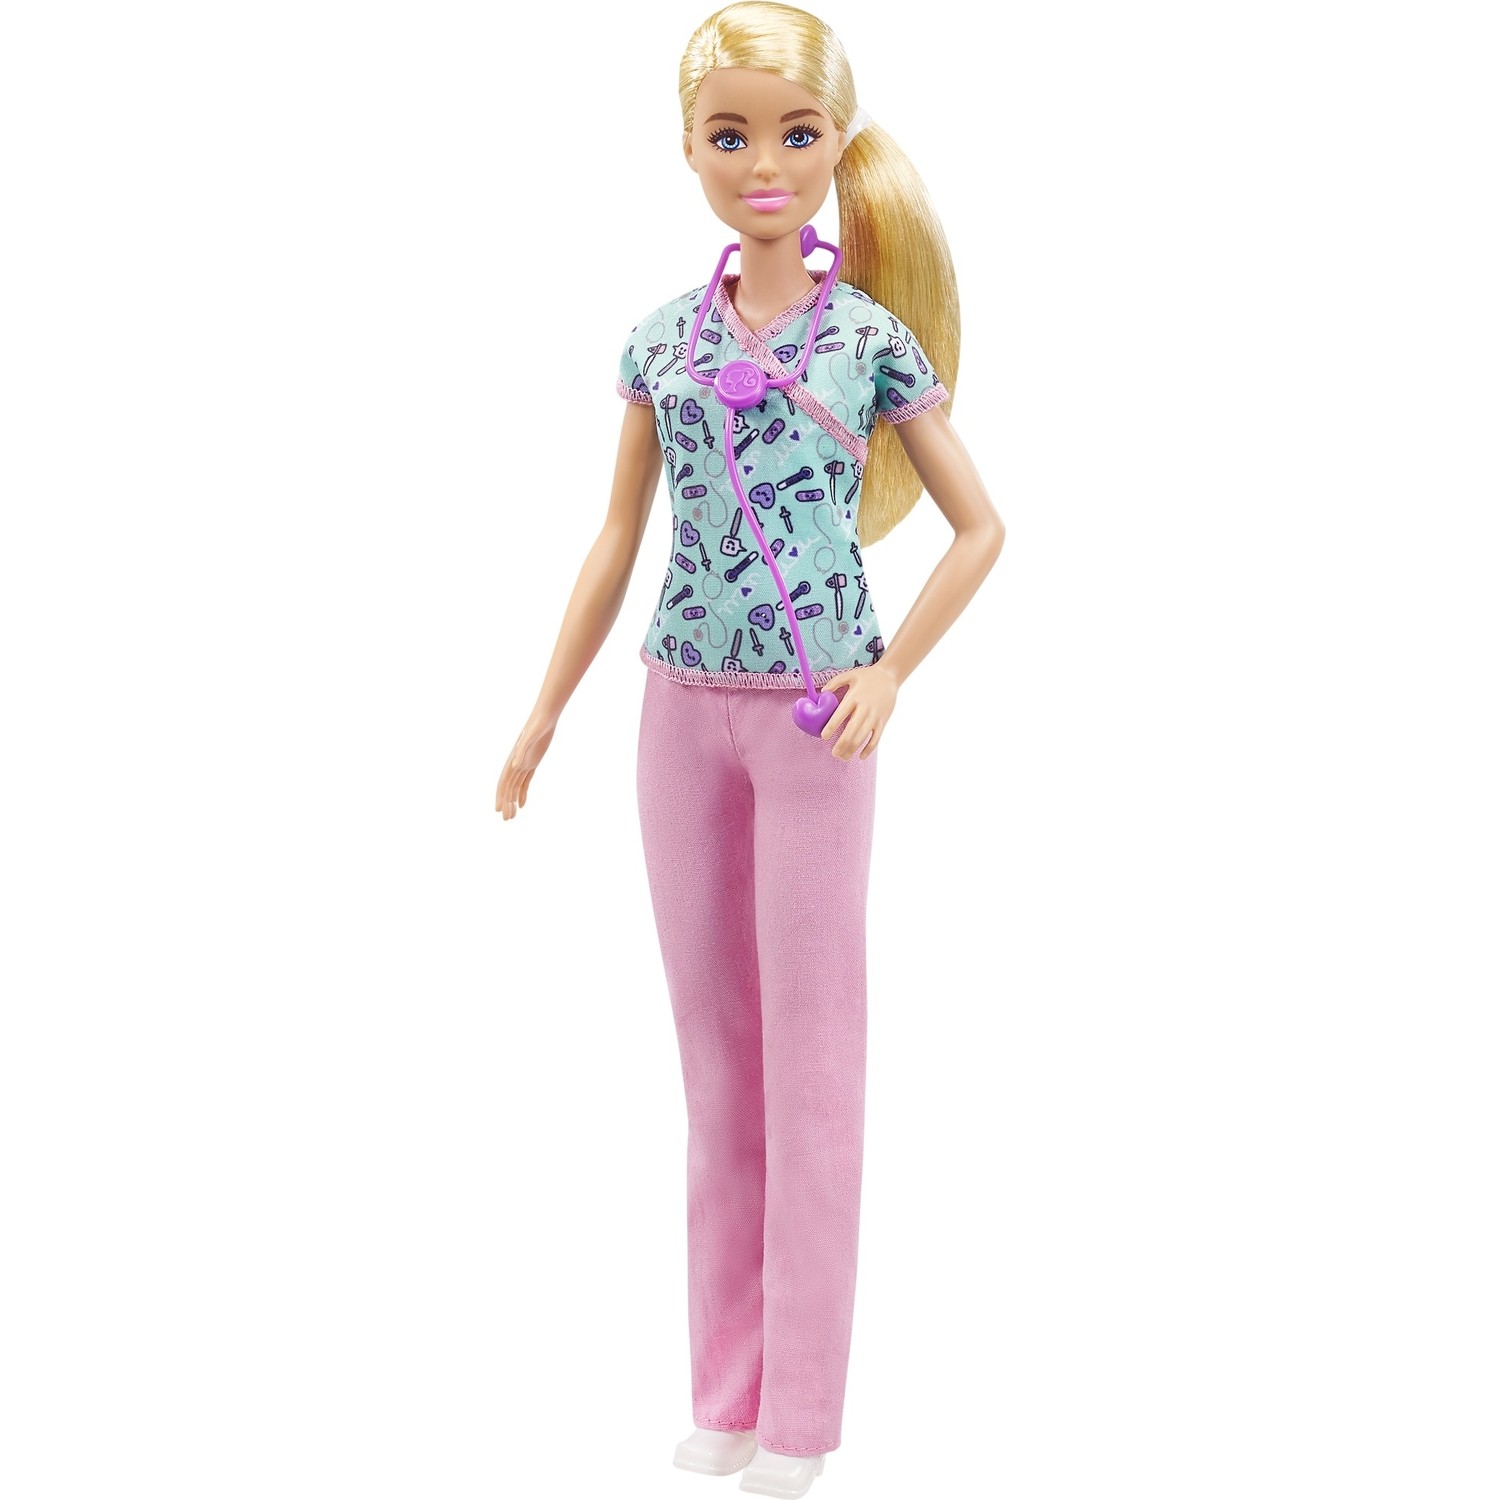 Кукла Barbie медсестра GTW39 кукла mattel barbie из серии кем быть dvf50 gtw39 педиатр